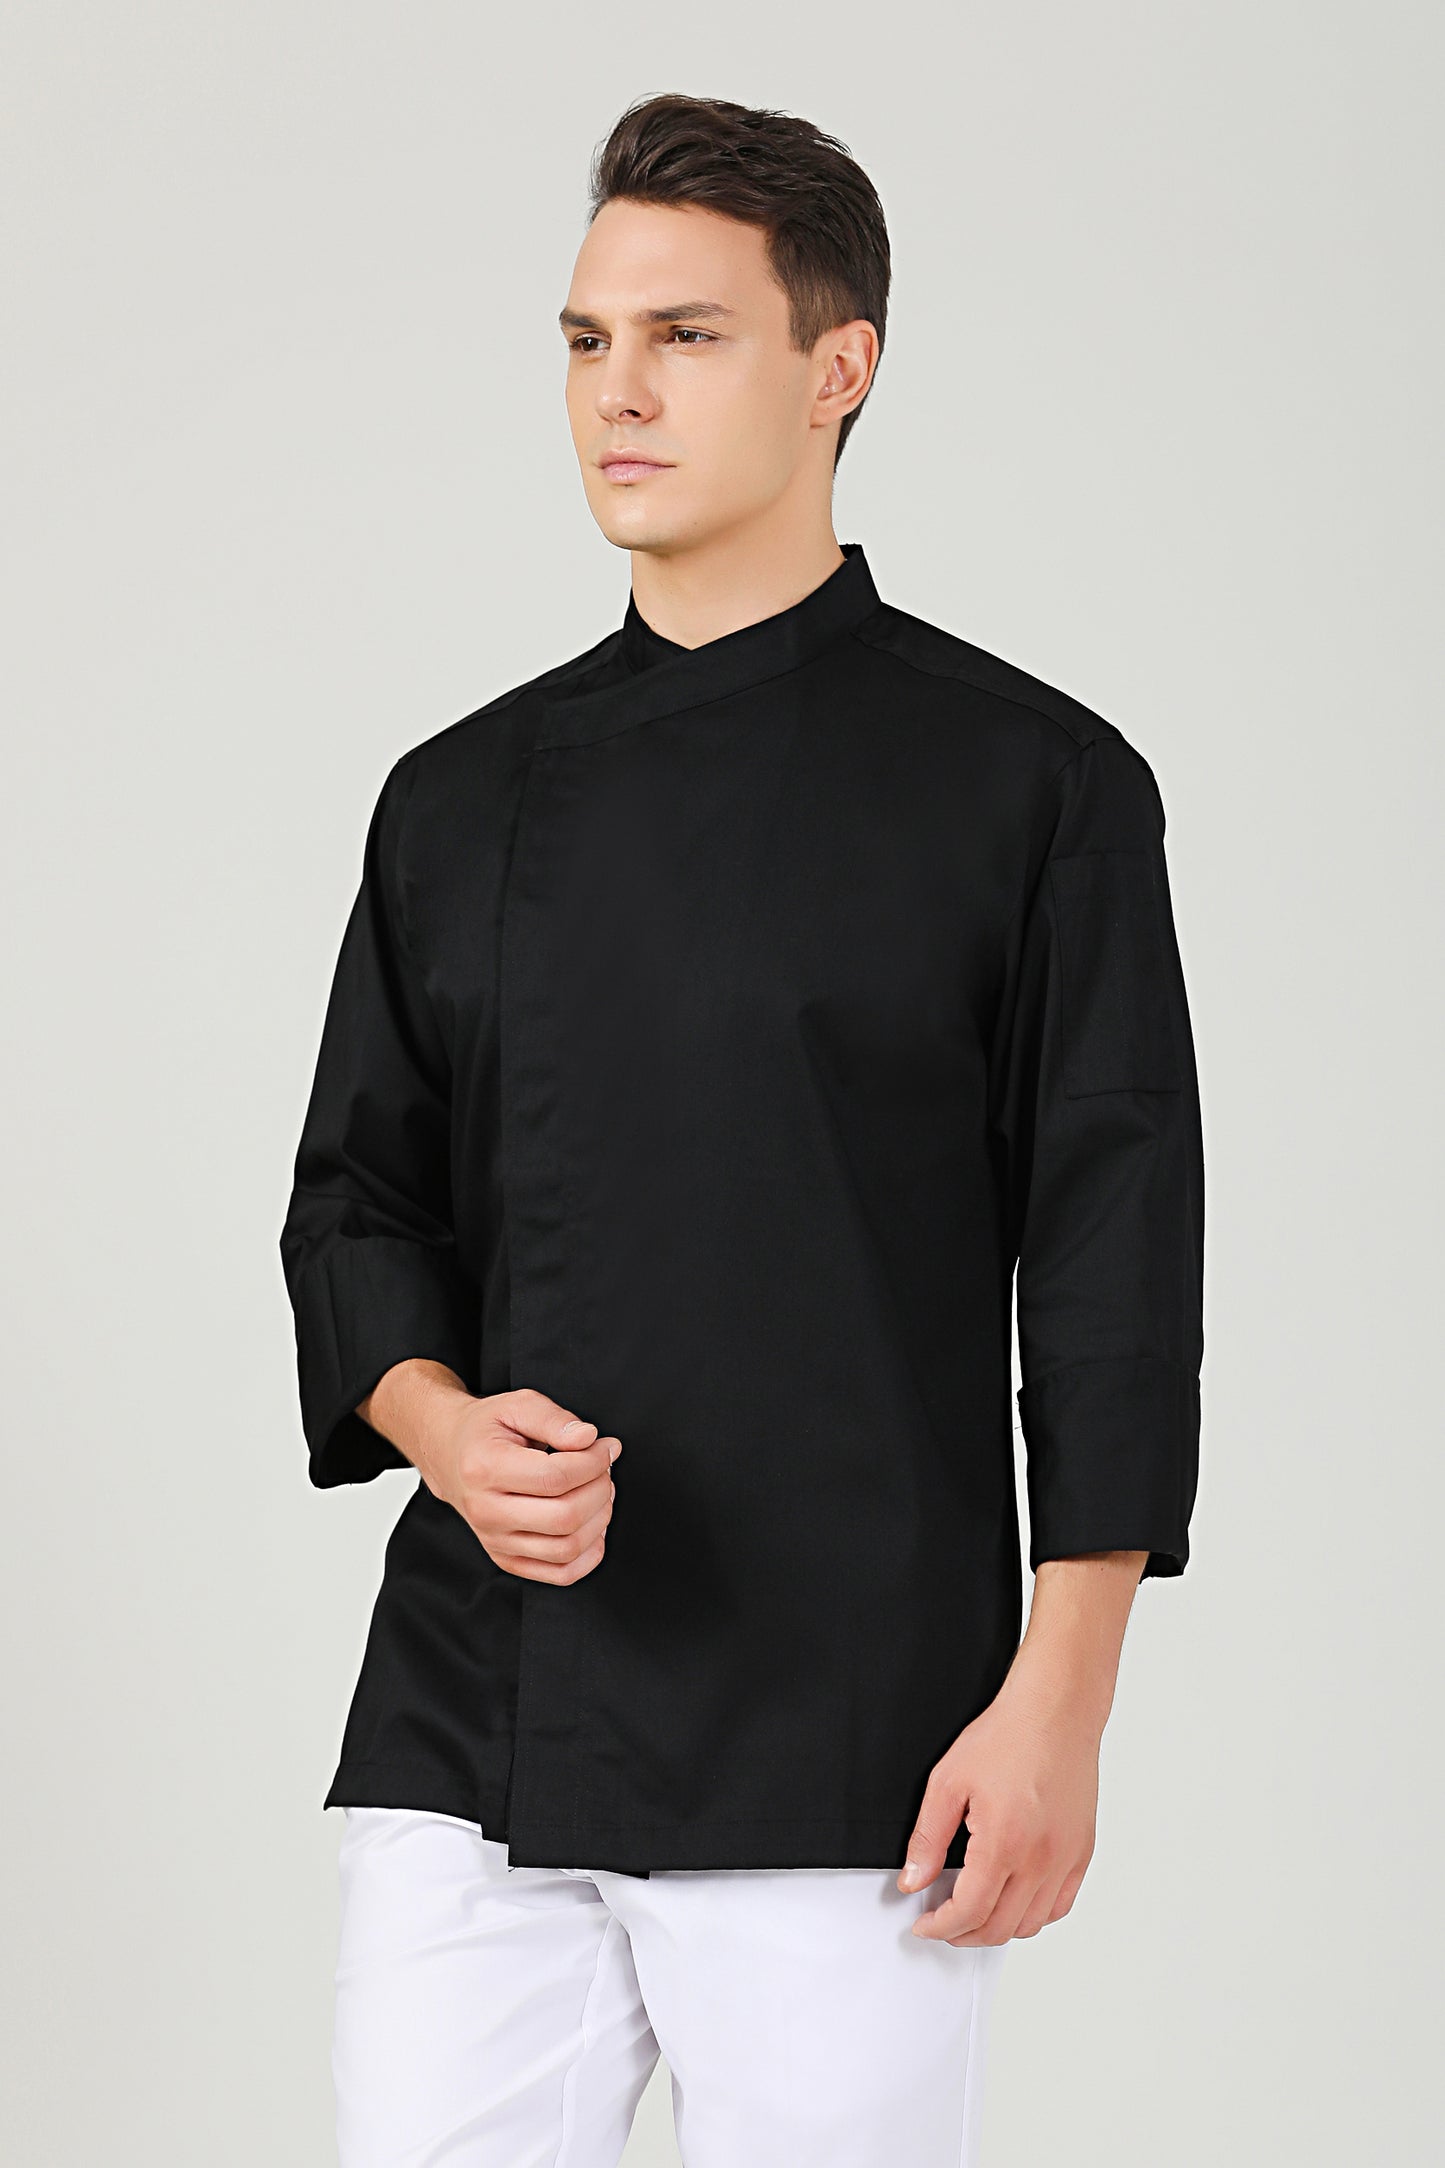 Thyme Black Chef Jacket, Long Sleeve